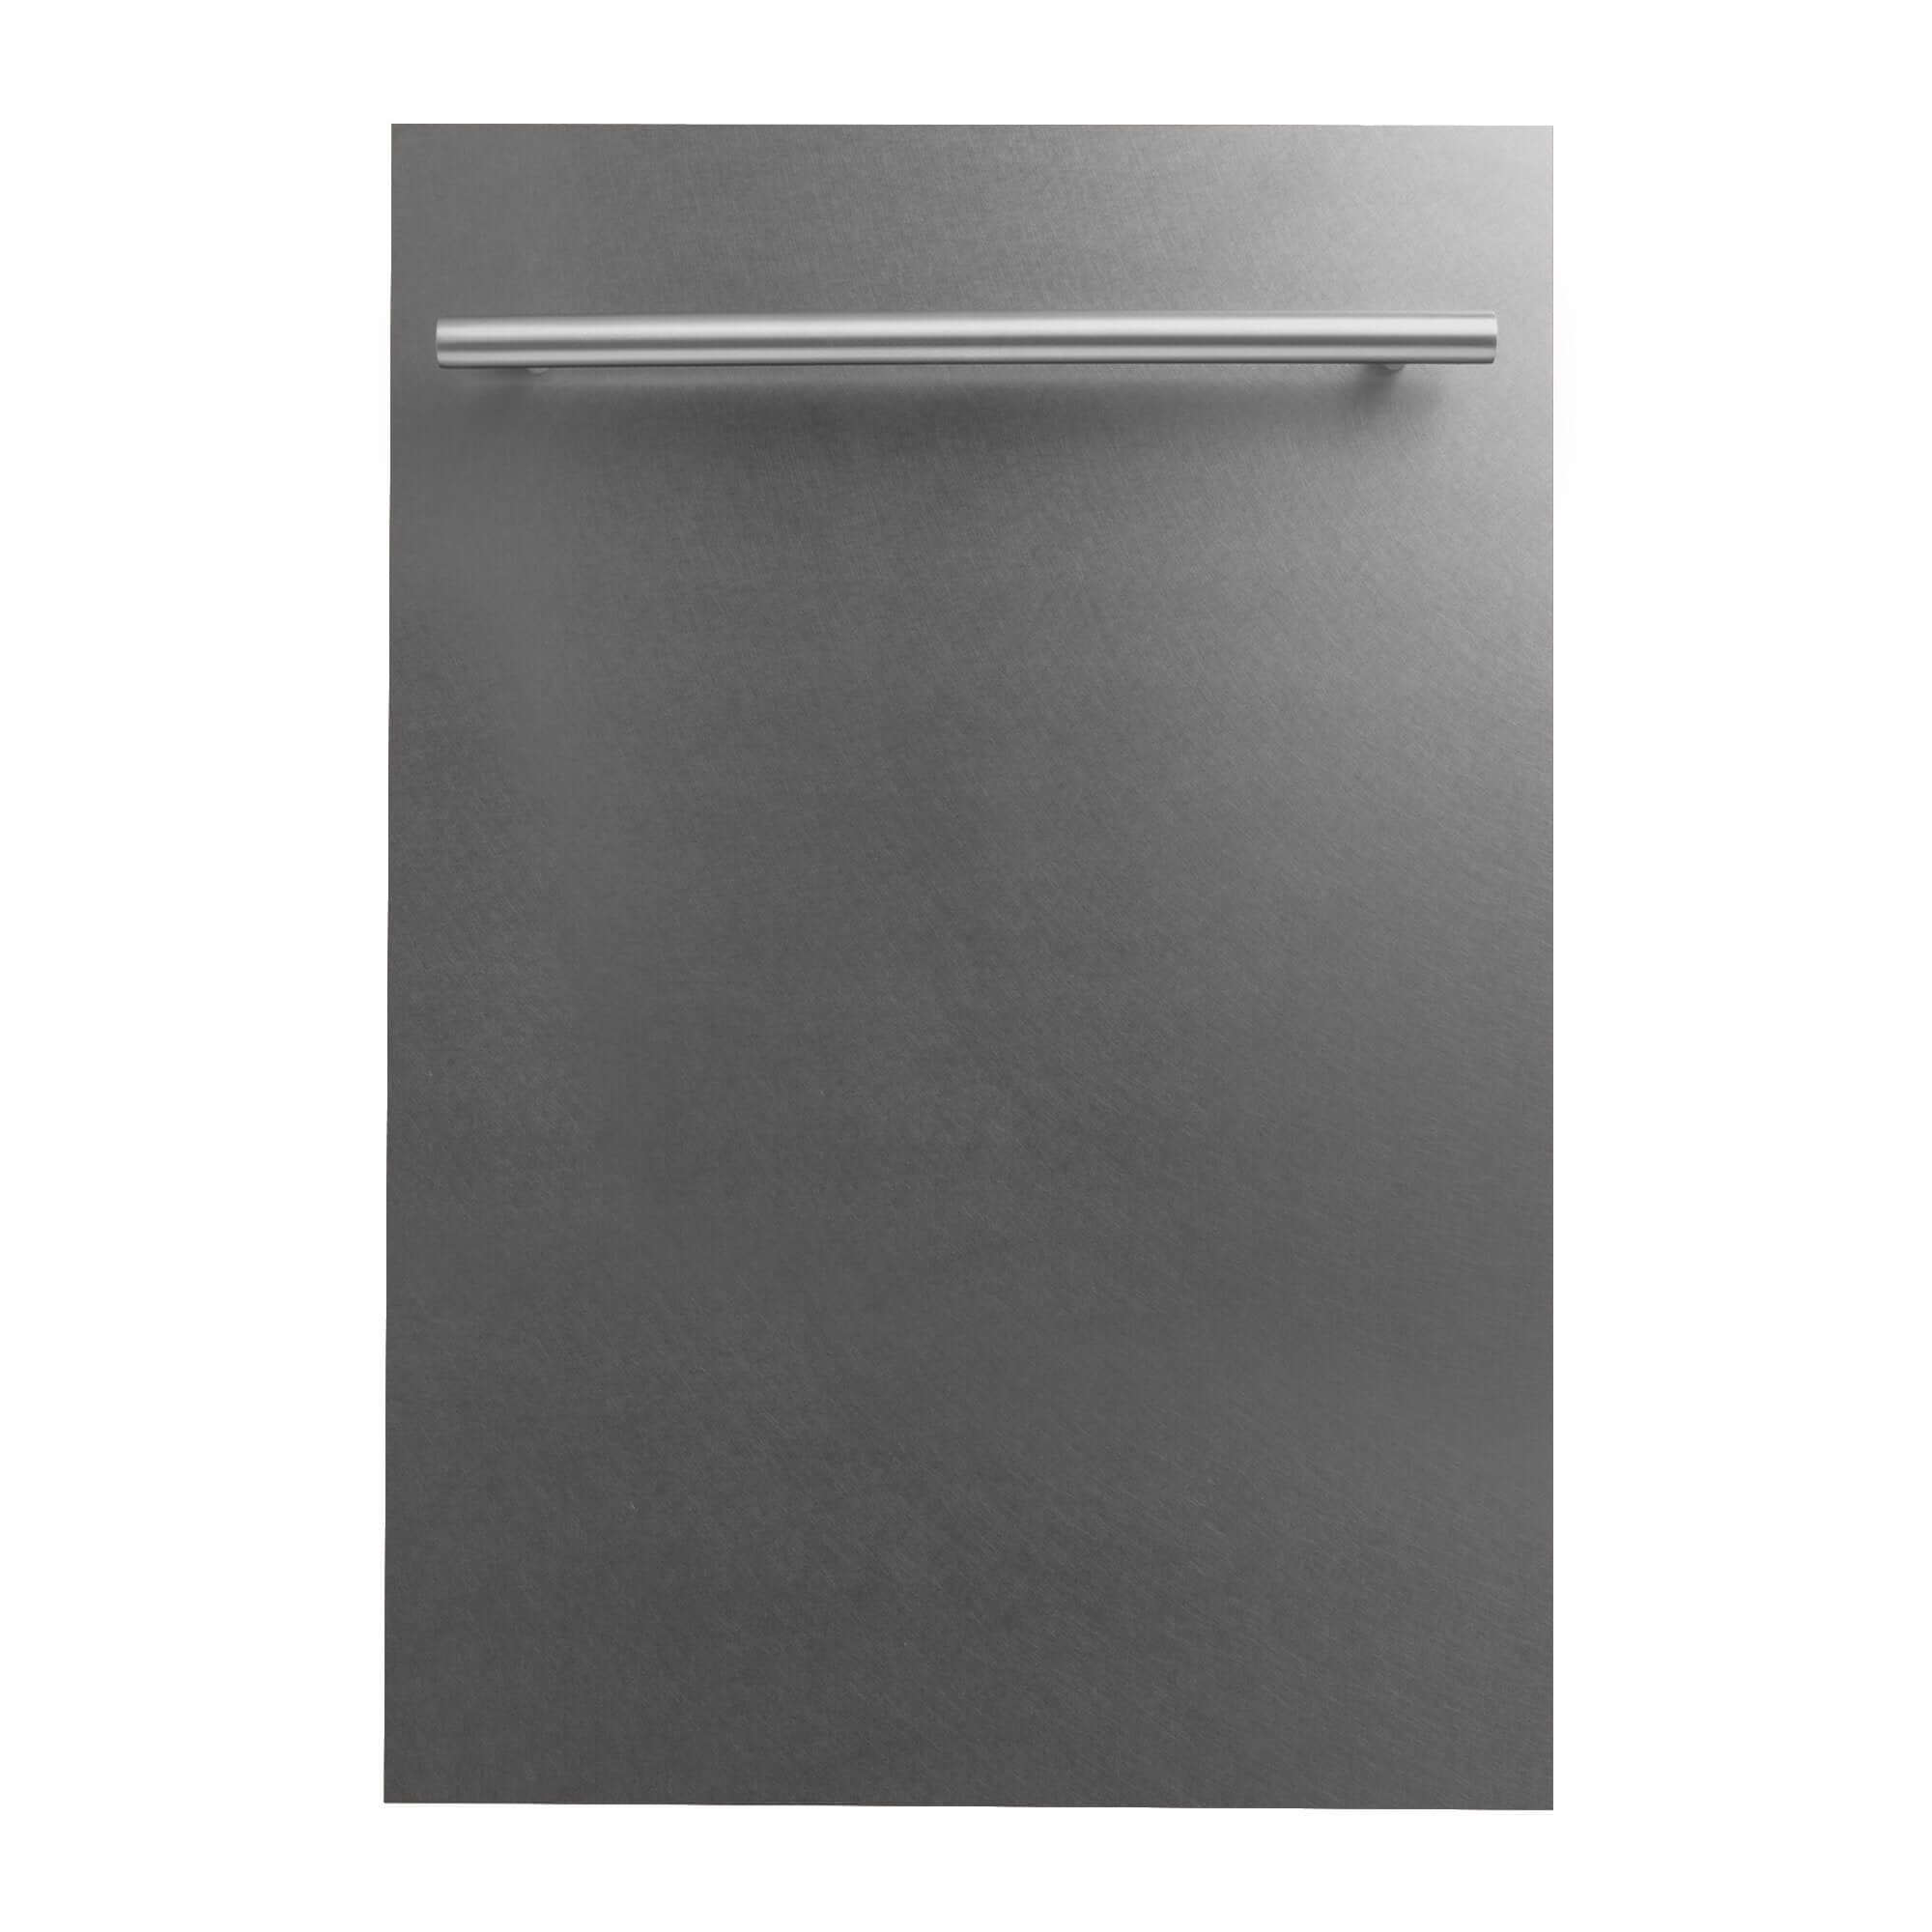 ZLINE 18 in. Dishwasher Panel with Modern Handle (DP-18) DuraSnow Stainless Steel